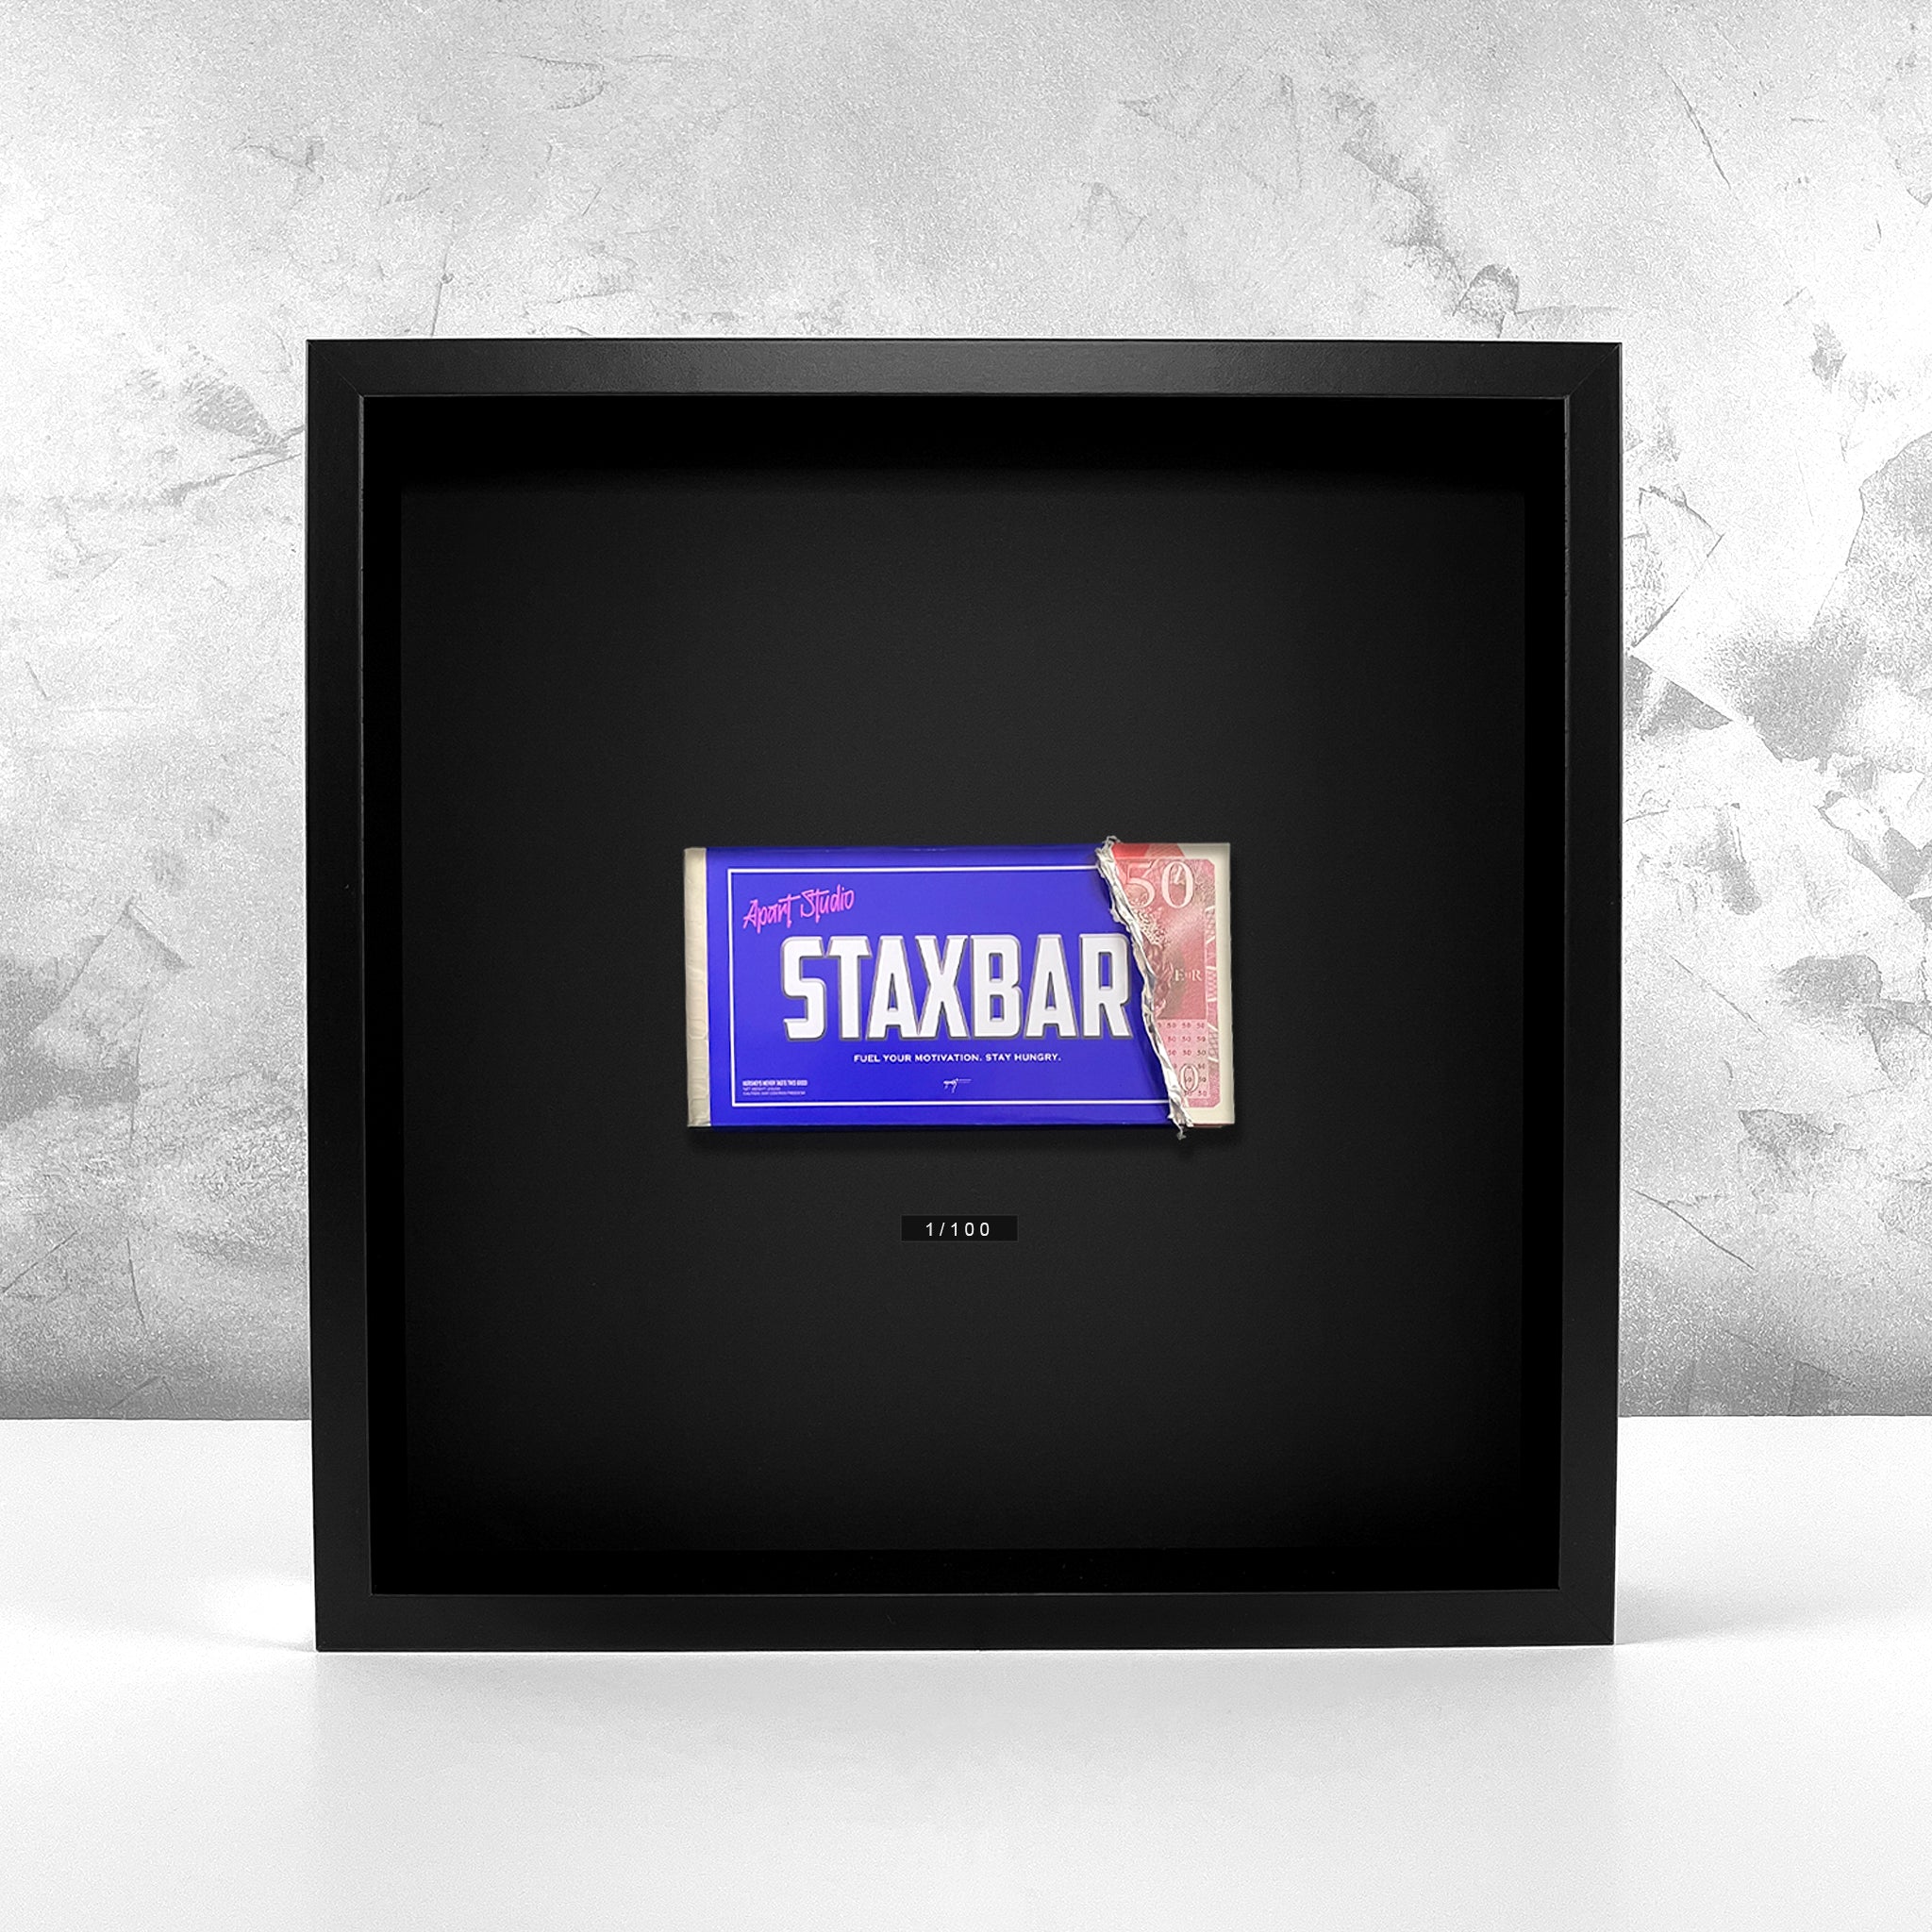 Staxbar Artwork - GBP